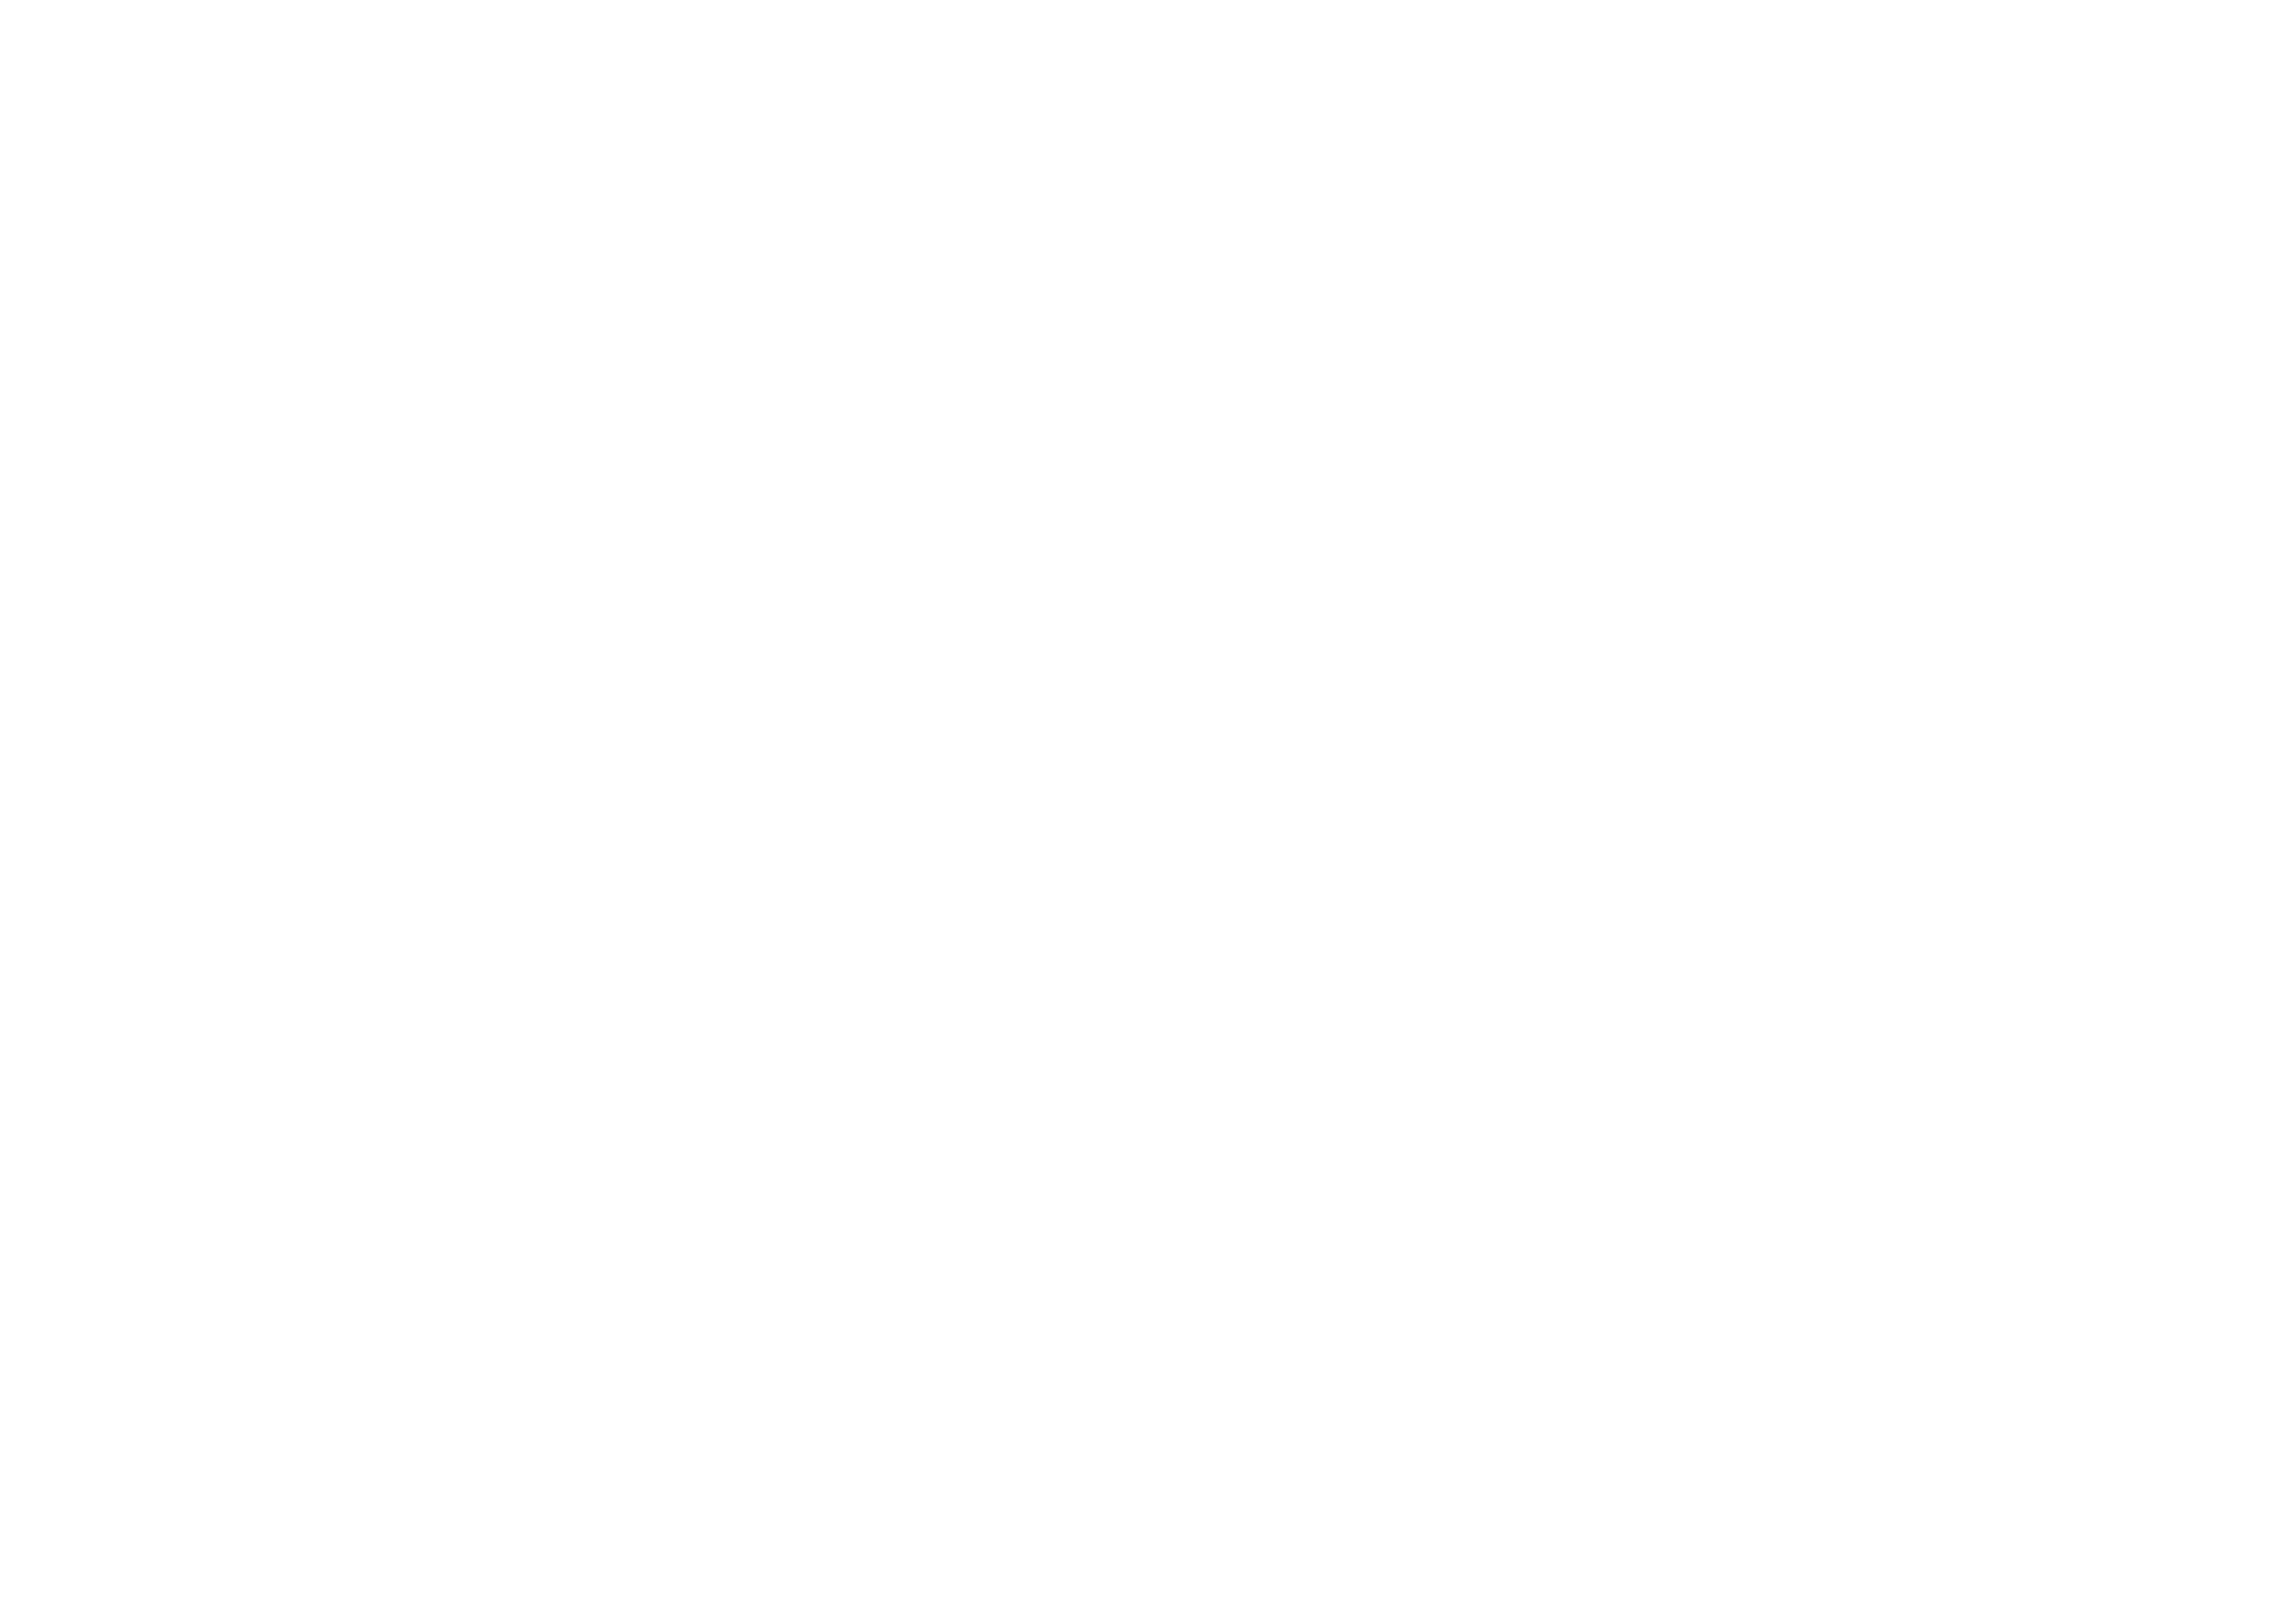 Logo Katharina Hübler